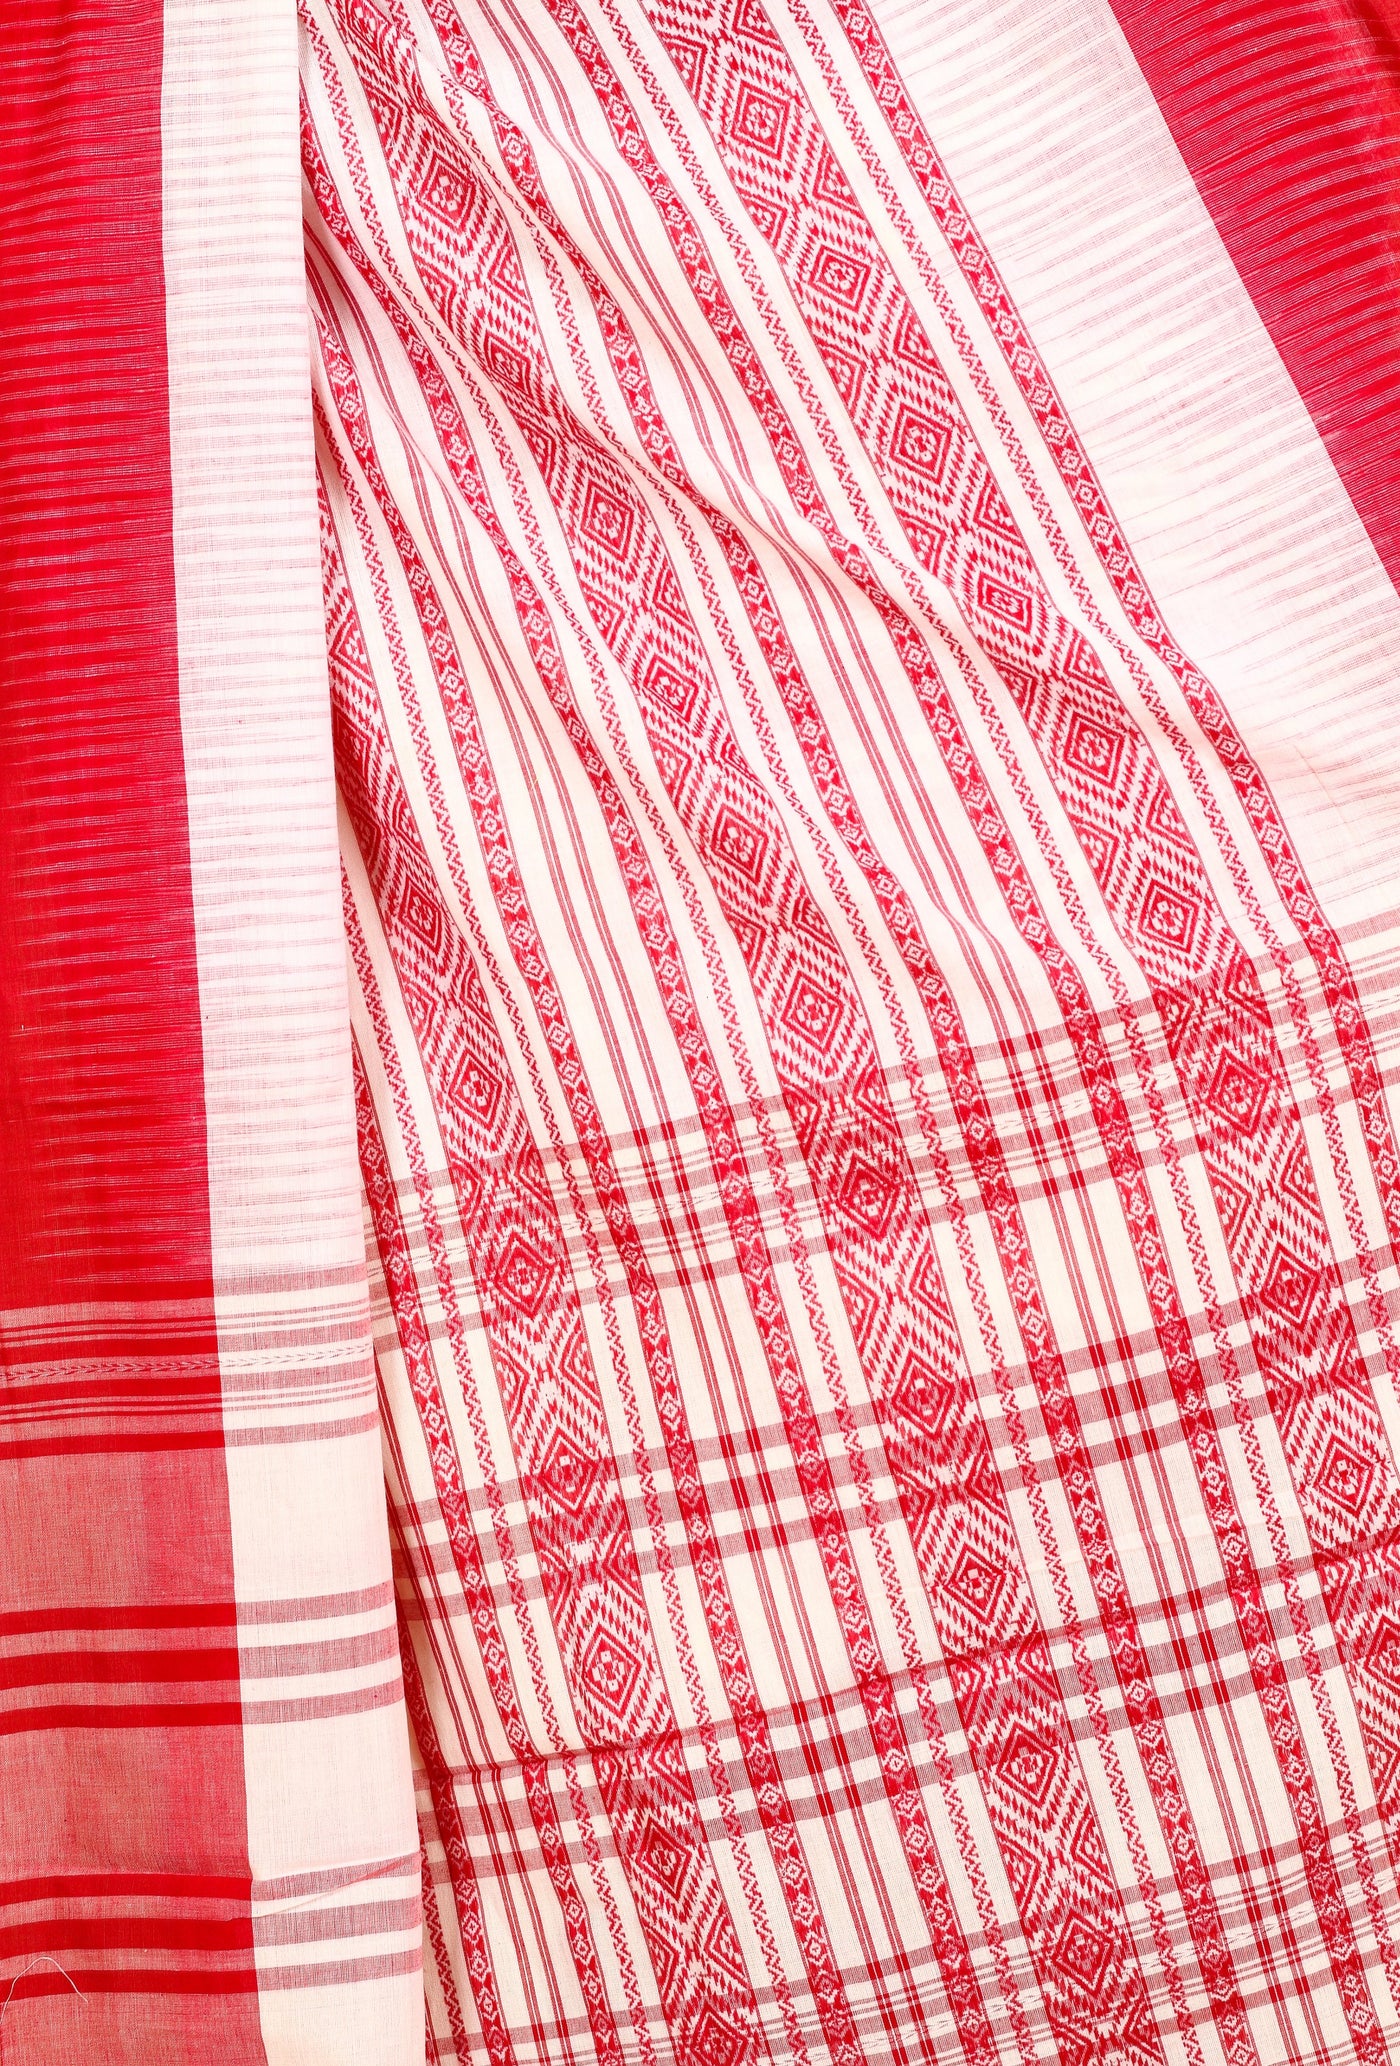 Red Cotton Geometric Handloom Saree